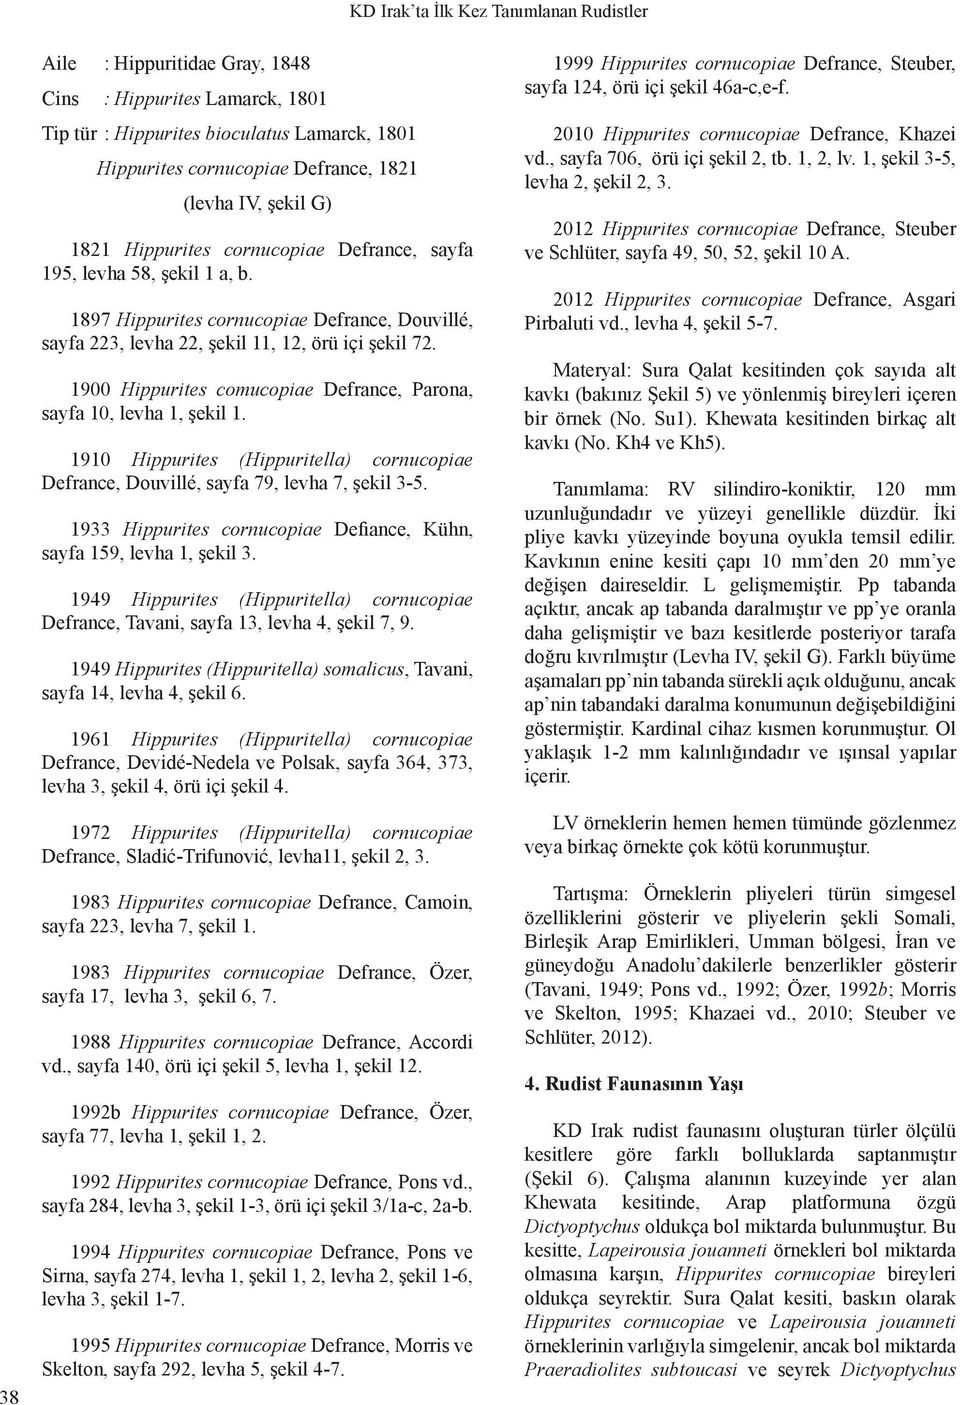 1900 Hippurites comucopiae Defrance, Parona, sayfa 10, levha 1, şekil 1. 1910 Hippurites (Hippuritella) cornucopiae Defrance, Douvillé, sayfa 79, levha 7, şekil 3-5.